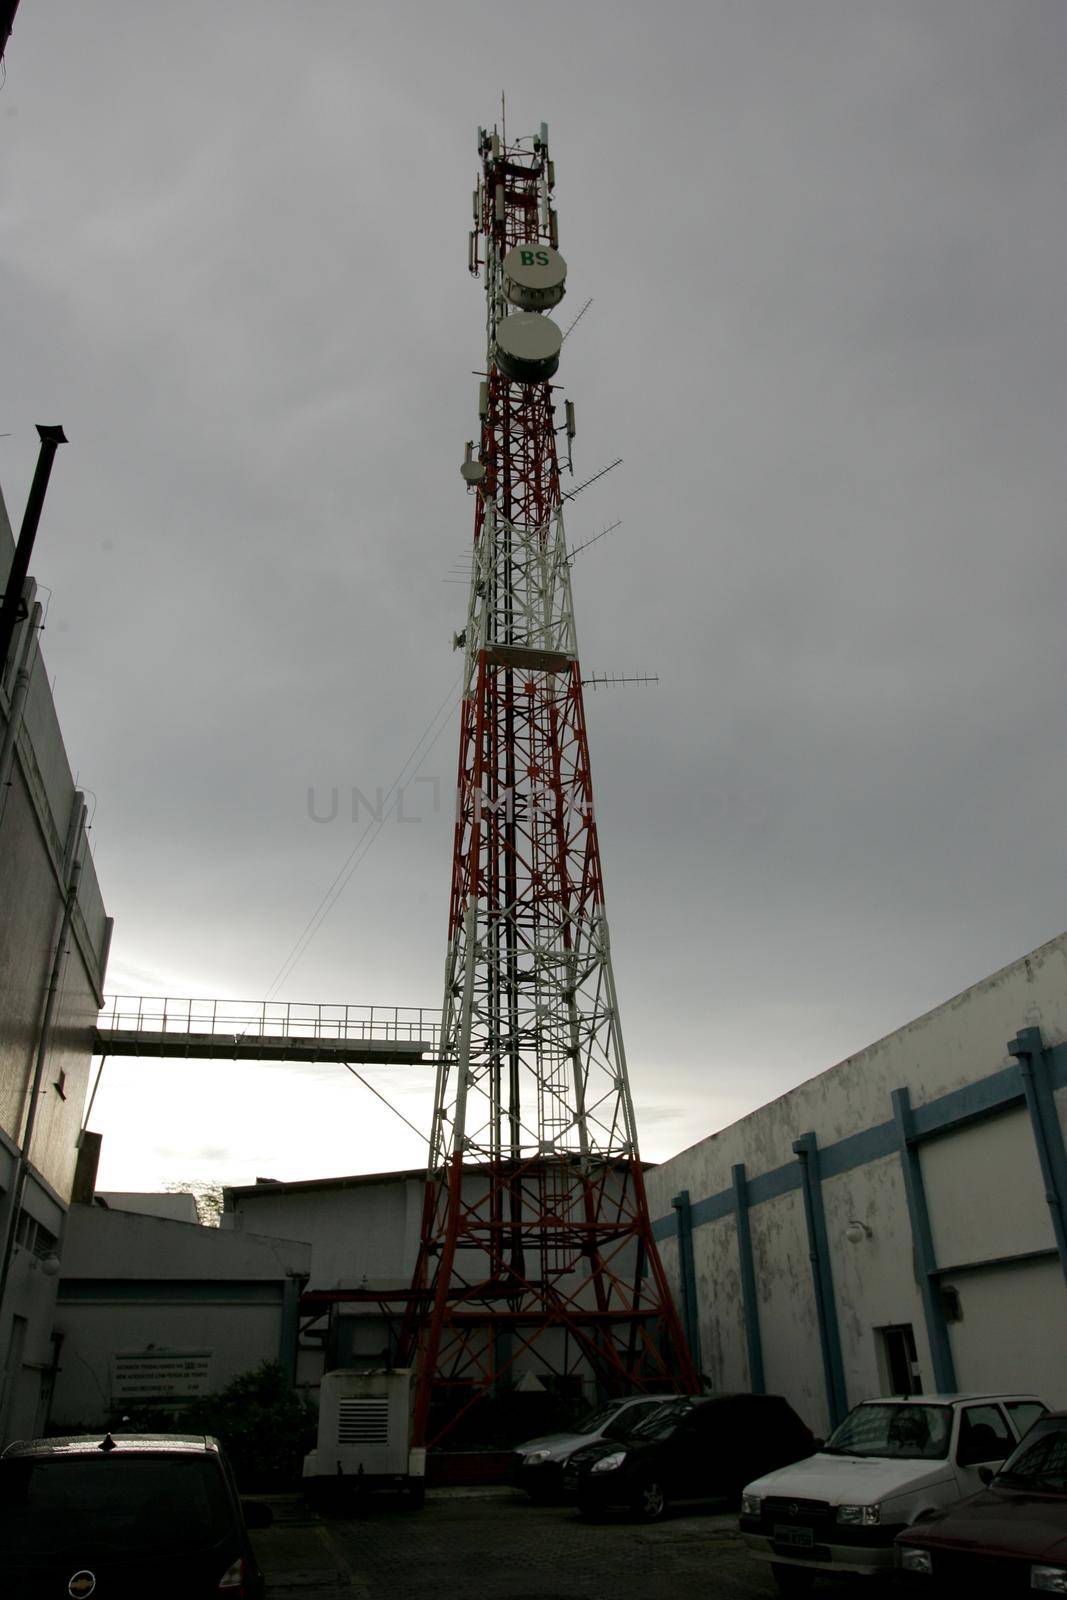 eunapolis, bahia / brazil - march 16, 2011: Cell phone tower is seen in Eunapolis City Center.